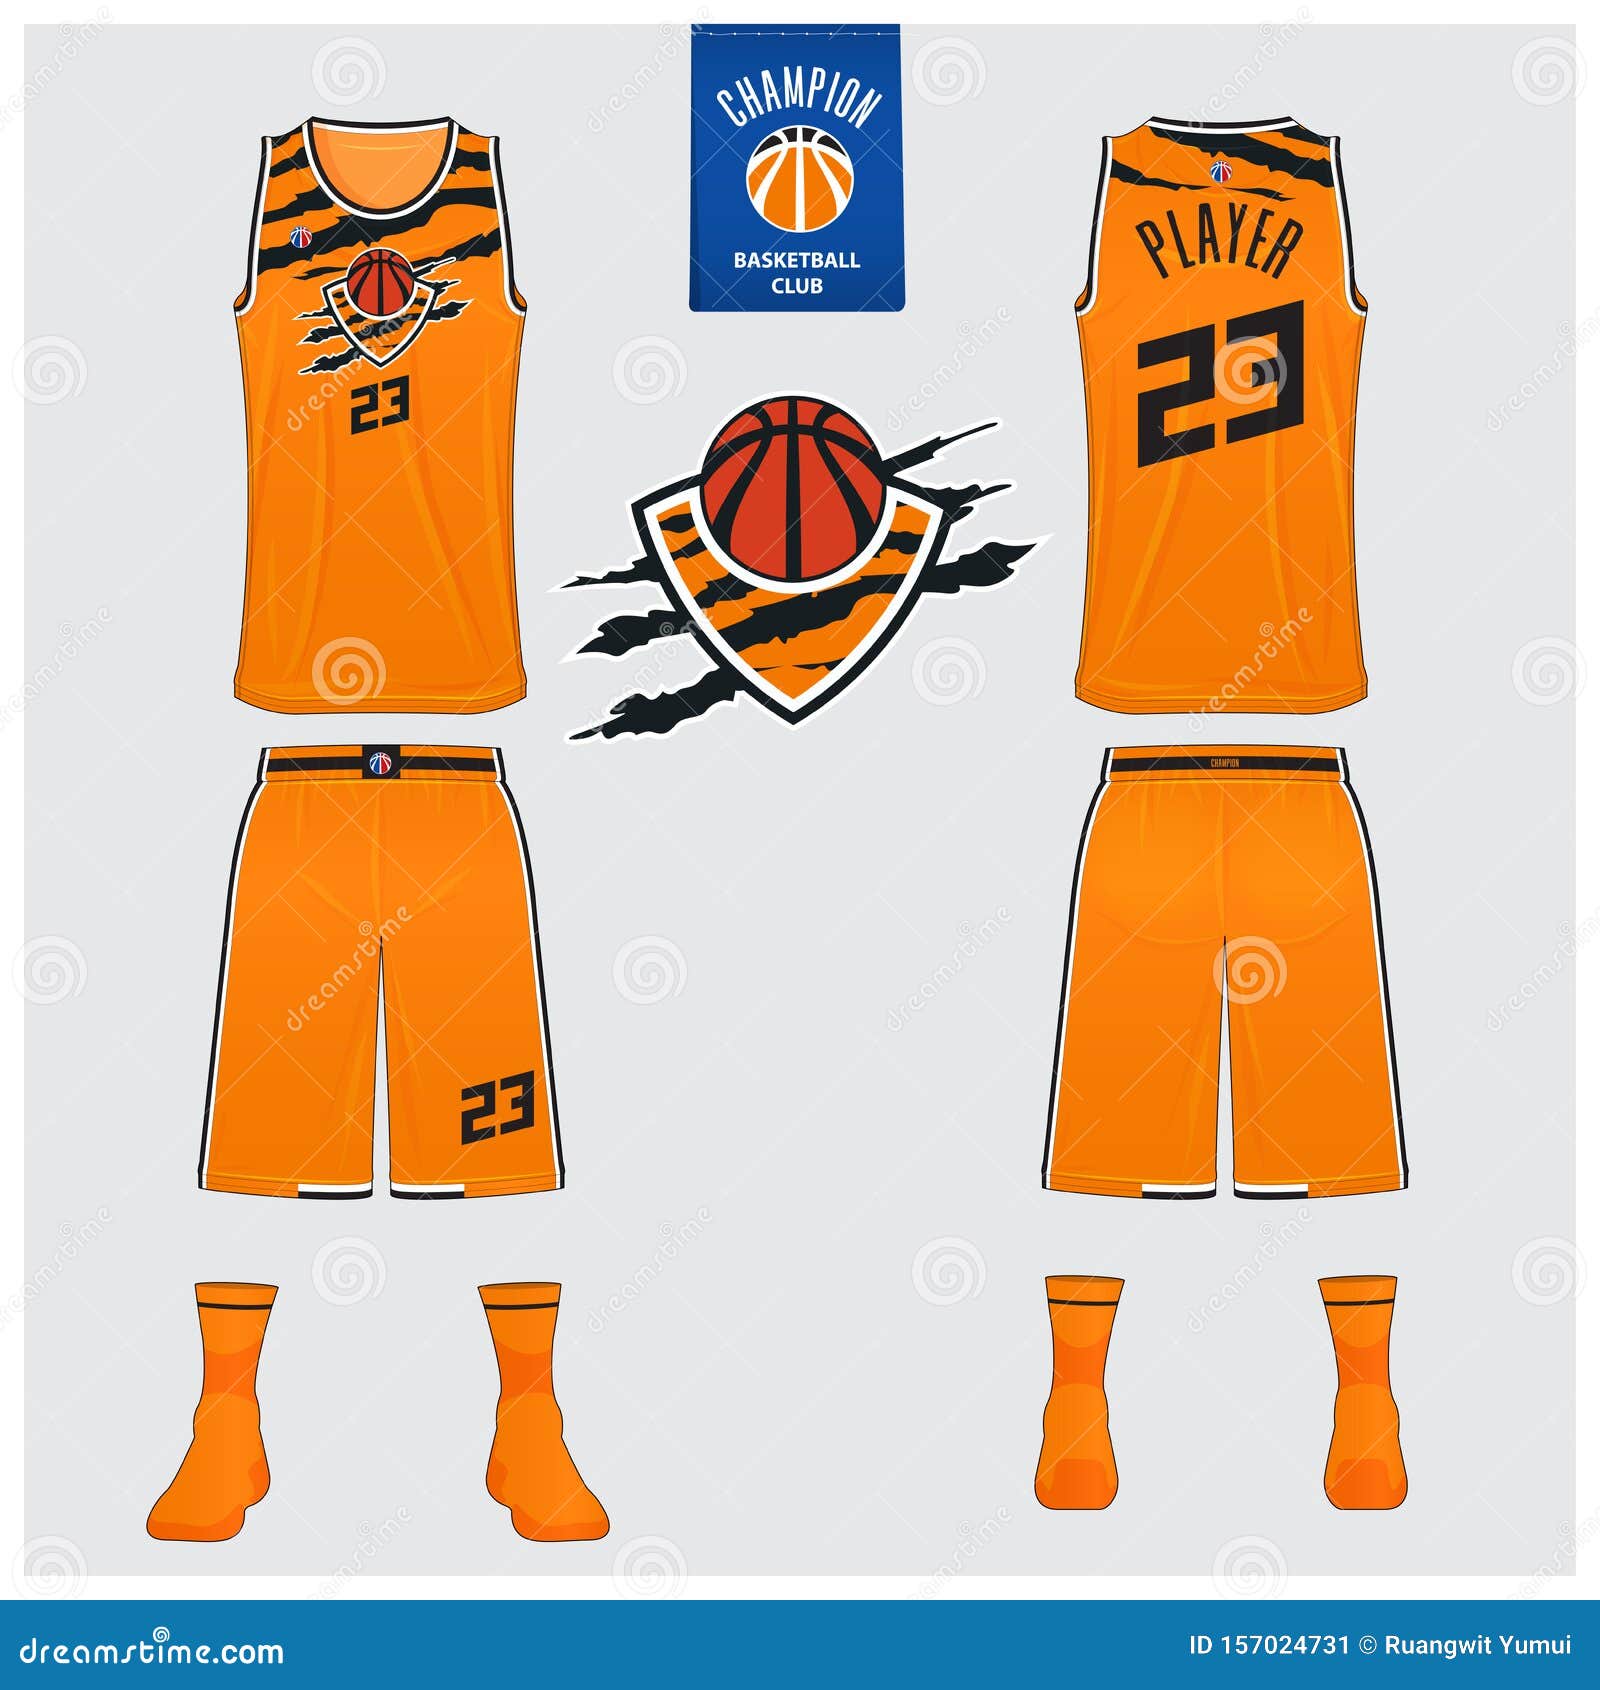 Basketball Uniform Mockup Template Design For Basketball ...